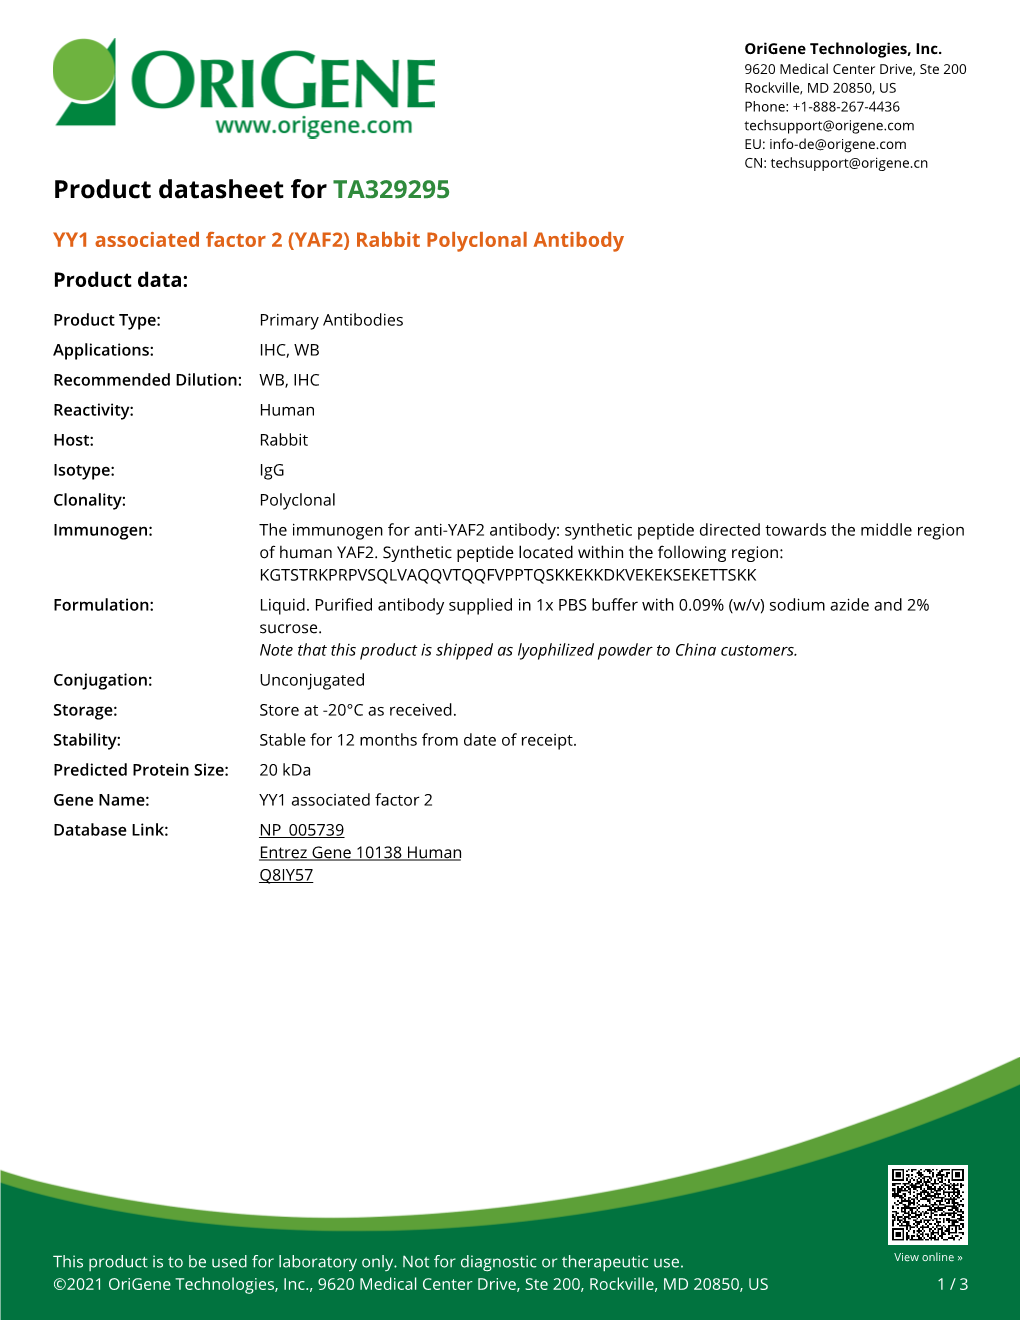 YY1 Associated Factor 2 (YAF2) Rabbit Polyclonal Antibody Product Data